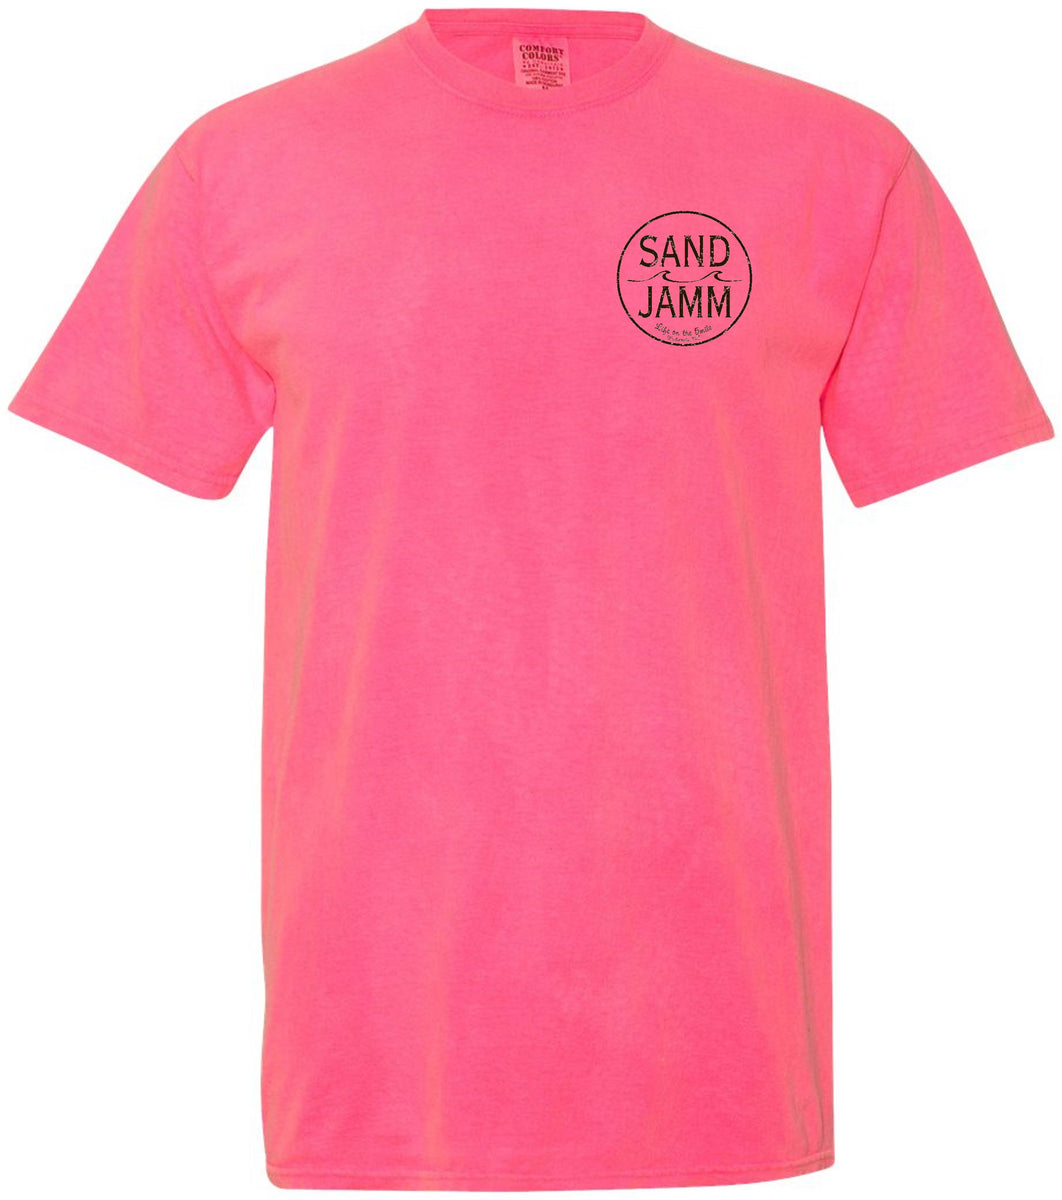 Sand Neon - Tee Pink Jamm – Classic